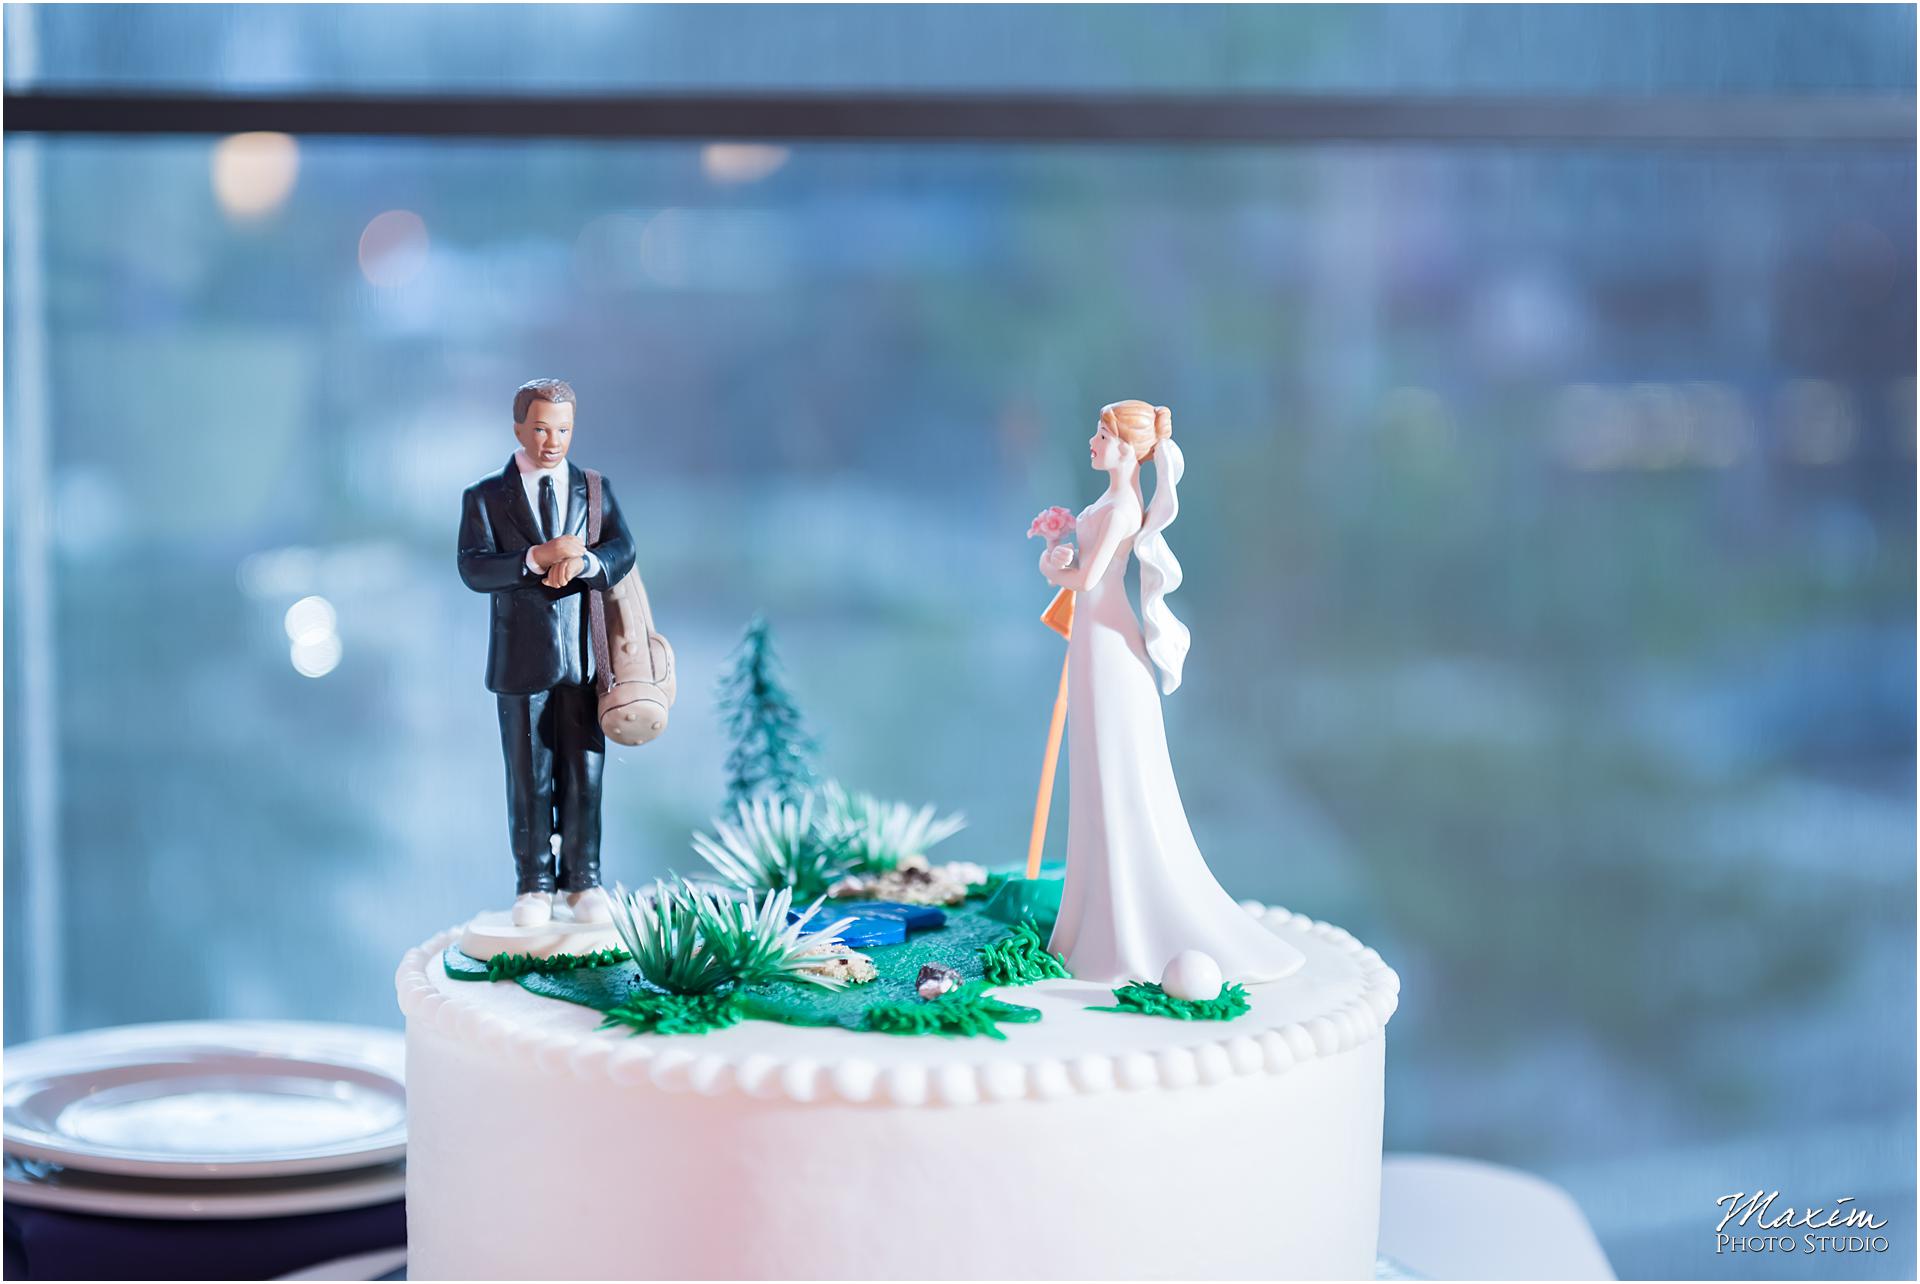 The Center Cincinnati Wedding Reception cake topper